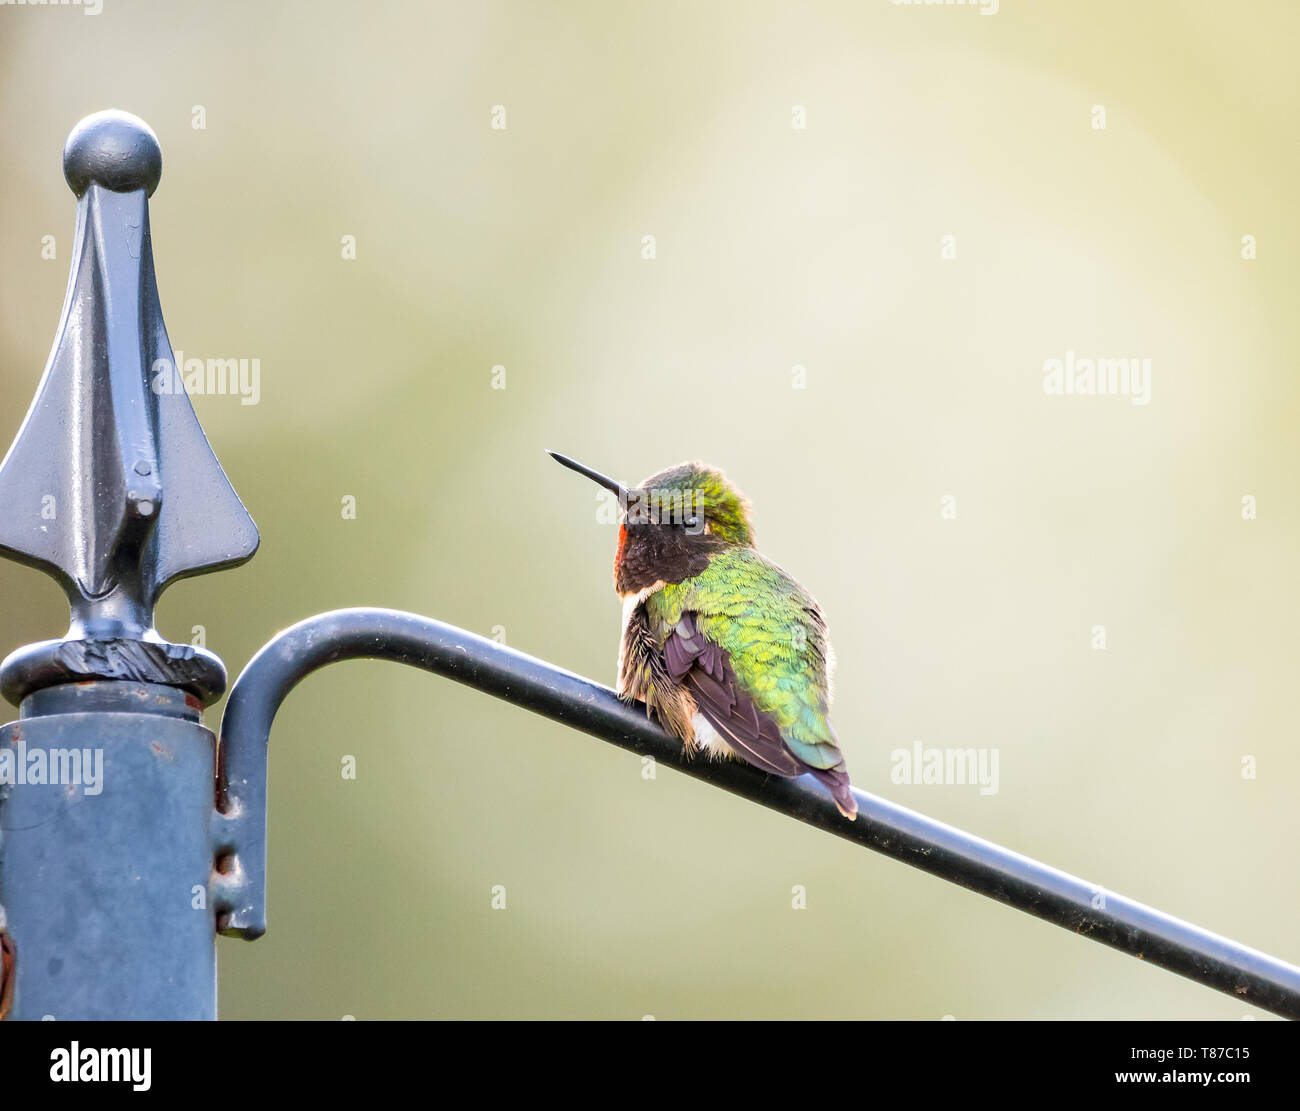 Maschio Hummingbird Ruby-Throated seduto sul palo metallico. Foto Stock